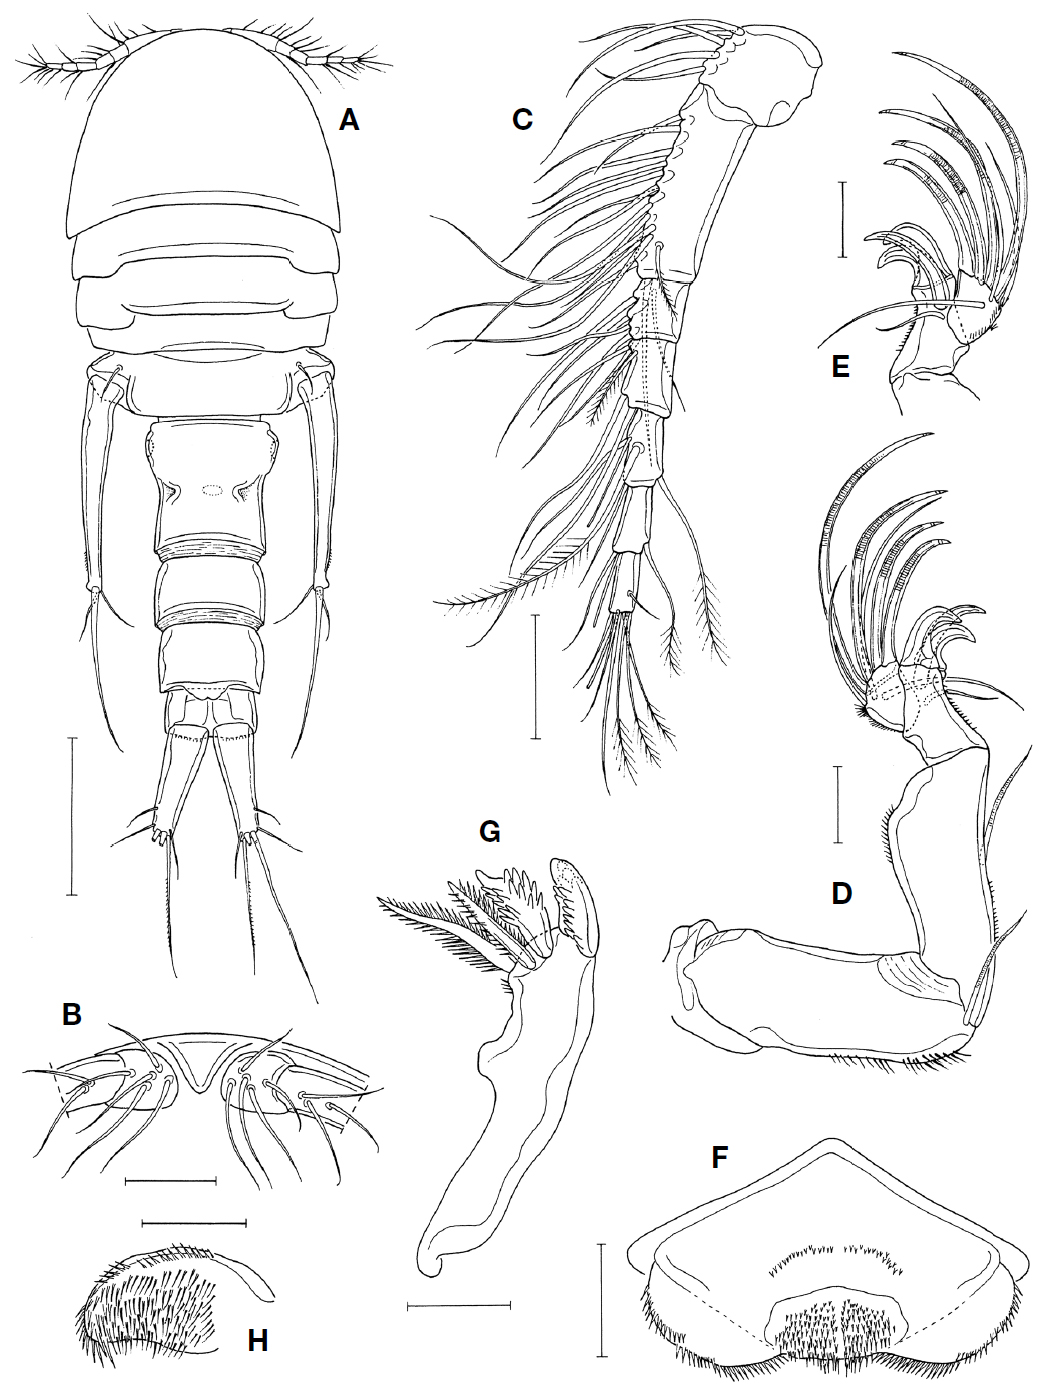 Hamaticyclops ahni n. gen. n. sp., female. A, Habitus, dorsal; B, Rostral area, ventral; C, Antennule; D, Antenna; E, Distal part of antenna; F, Labrum; G, Mandible; H, Paragnath. Scale bars=0.5 mm (A), 0.1 mm (B, C), 0.05 mm (D-H).